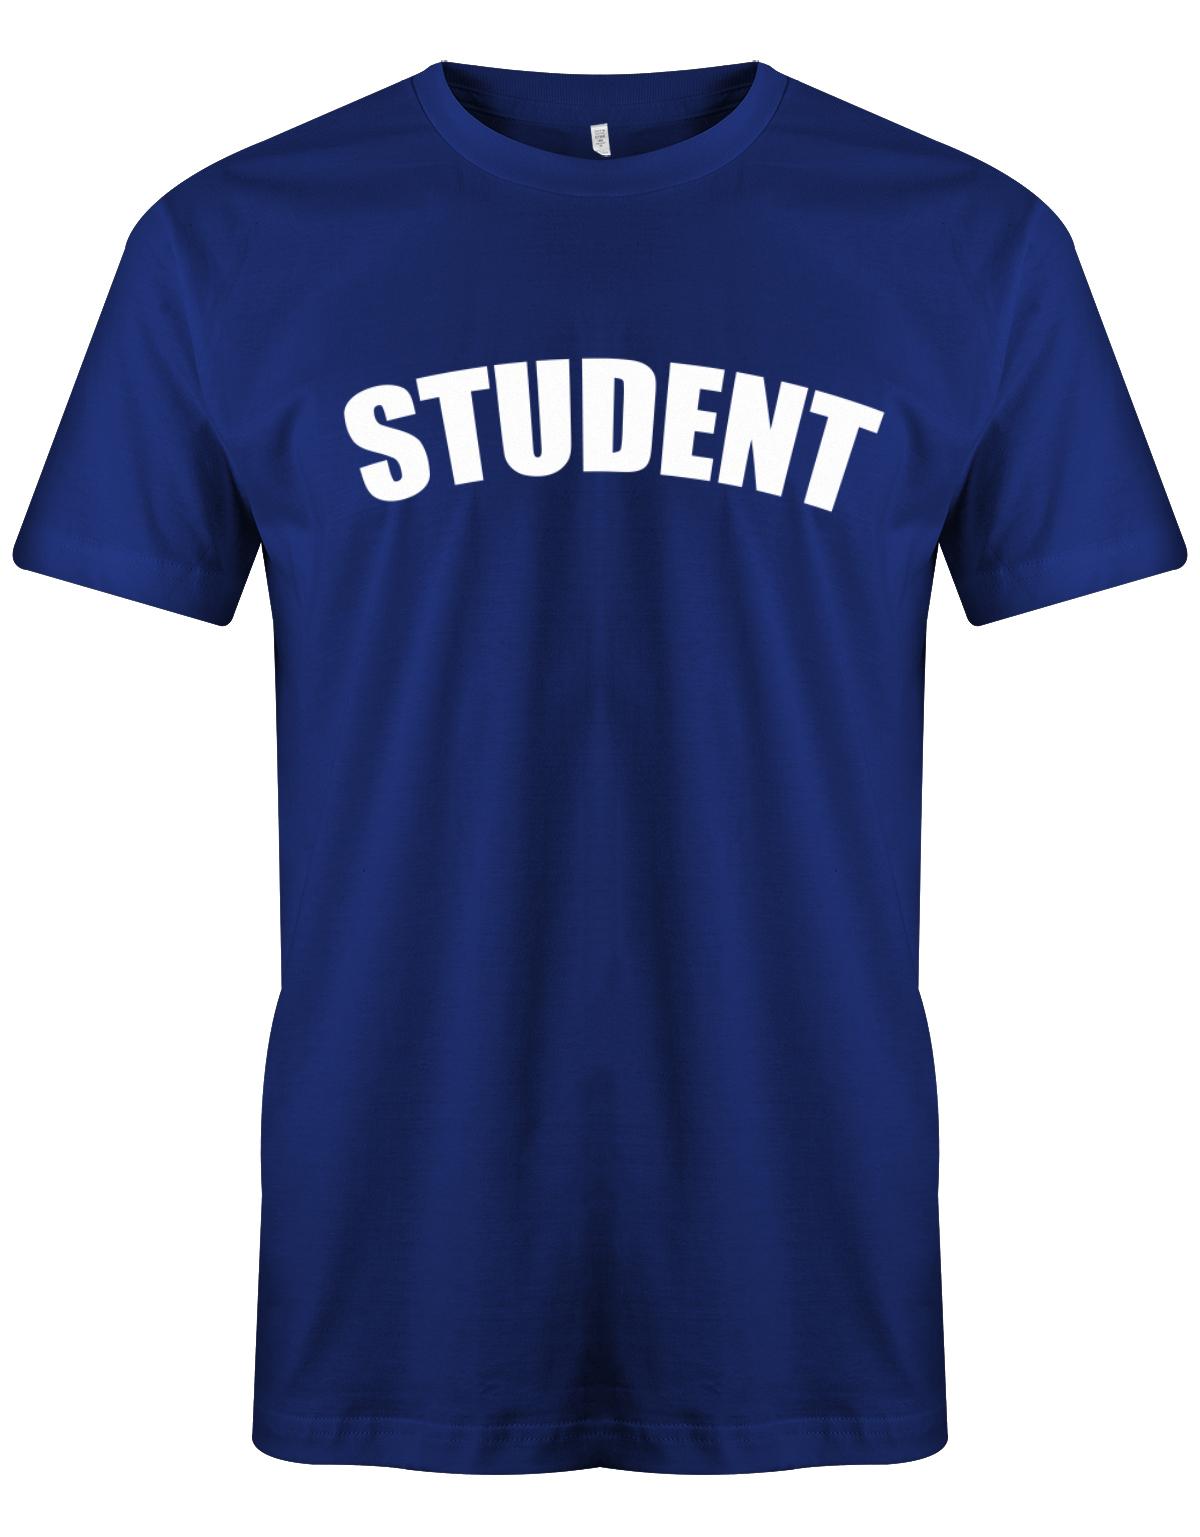 Student-Schrift-Herren-Shirt-Royalblau